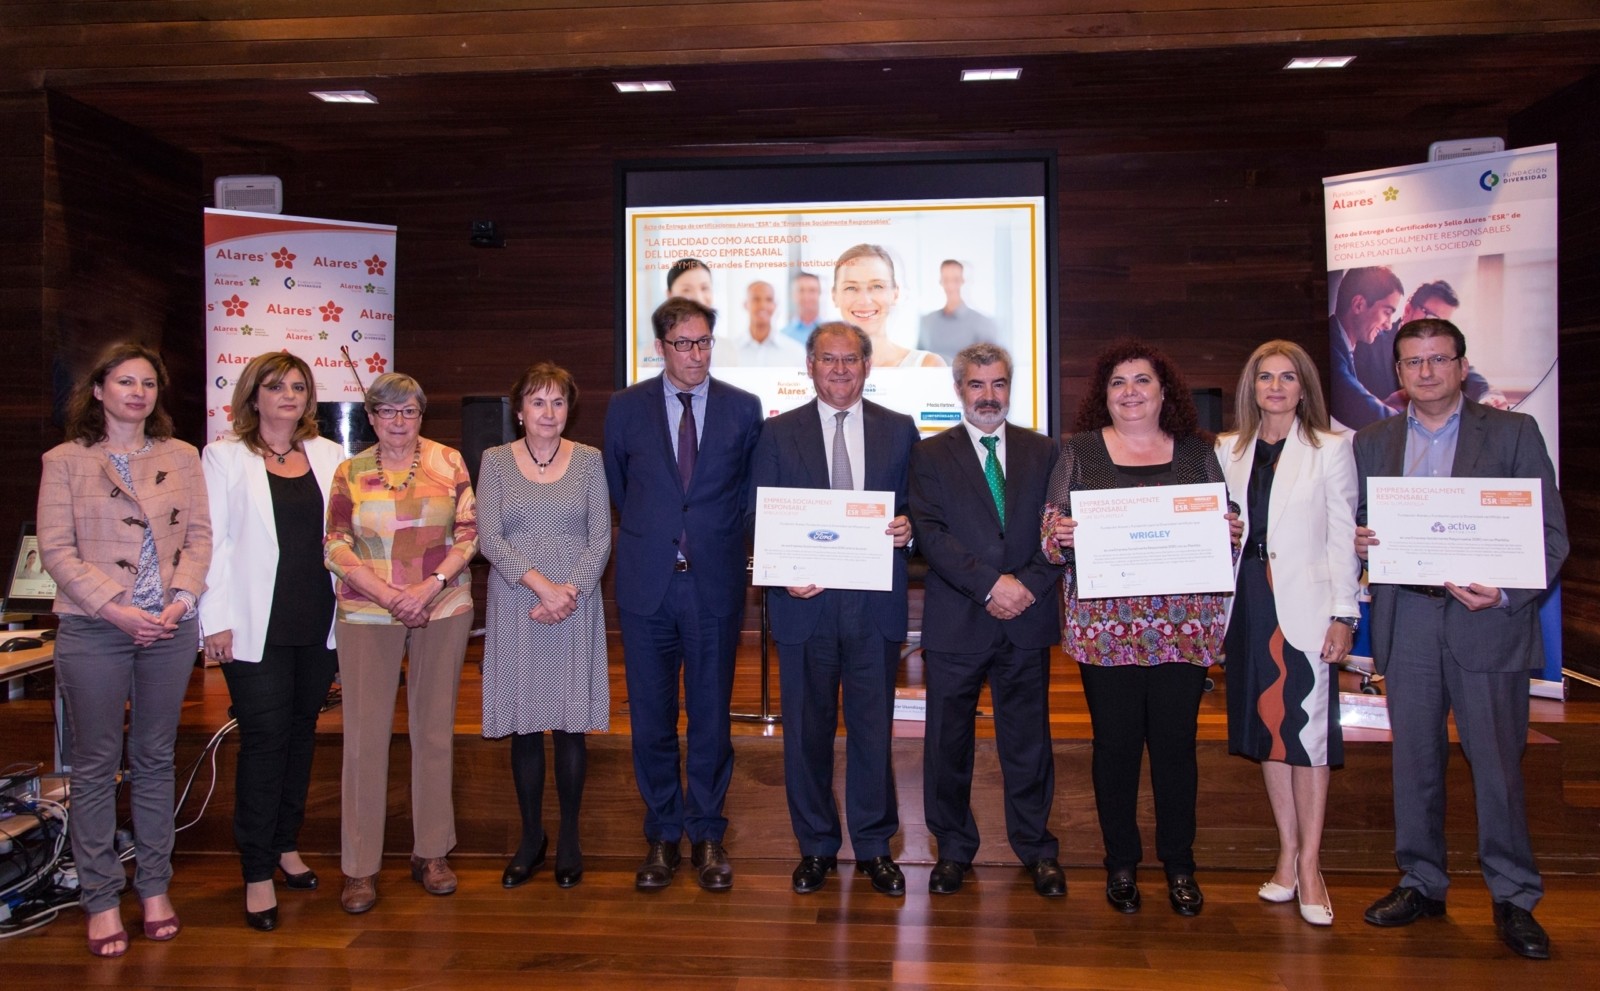 Entrega de certificado Alares “ESR” de “Empresas Socialmente Responsables”a organizaciones  de 1er nivel en Cataluña